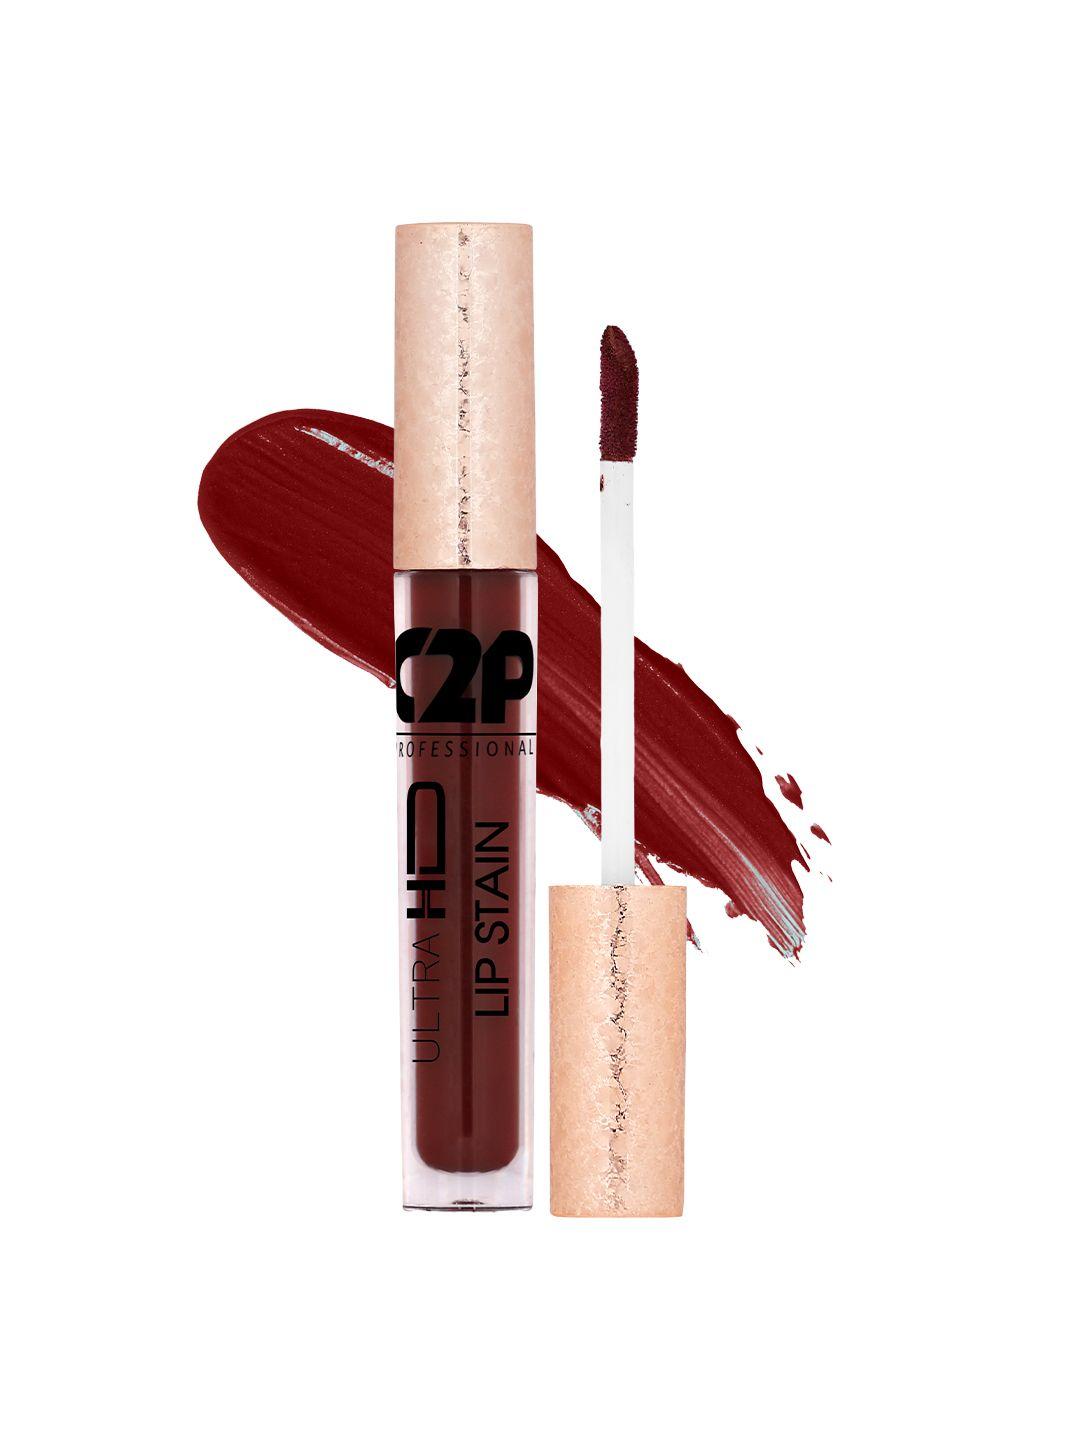 c2p professional makeup lip stain liquid lipstick - the dark angels 17 5ml